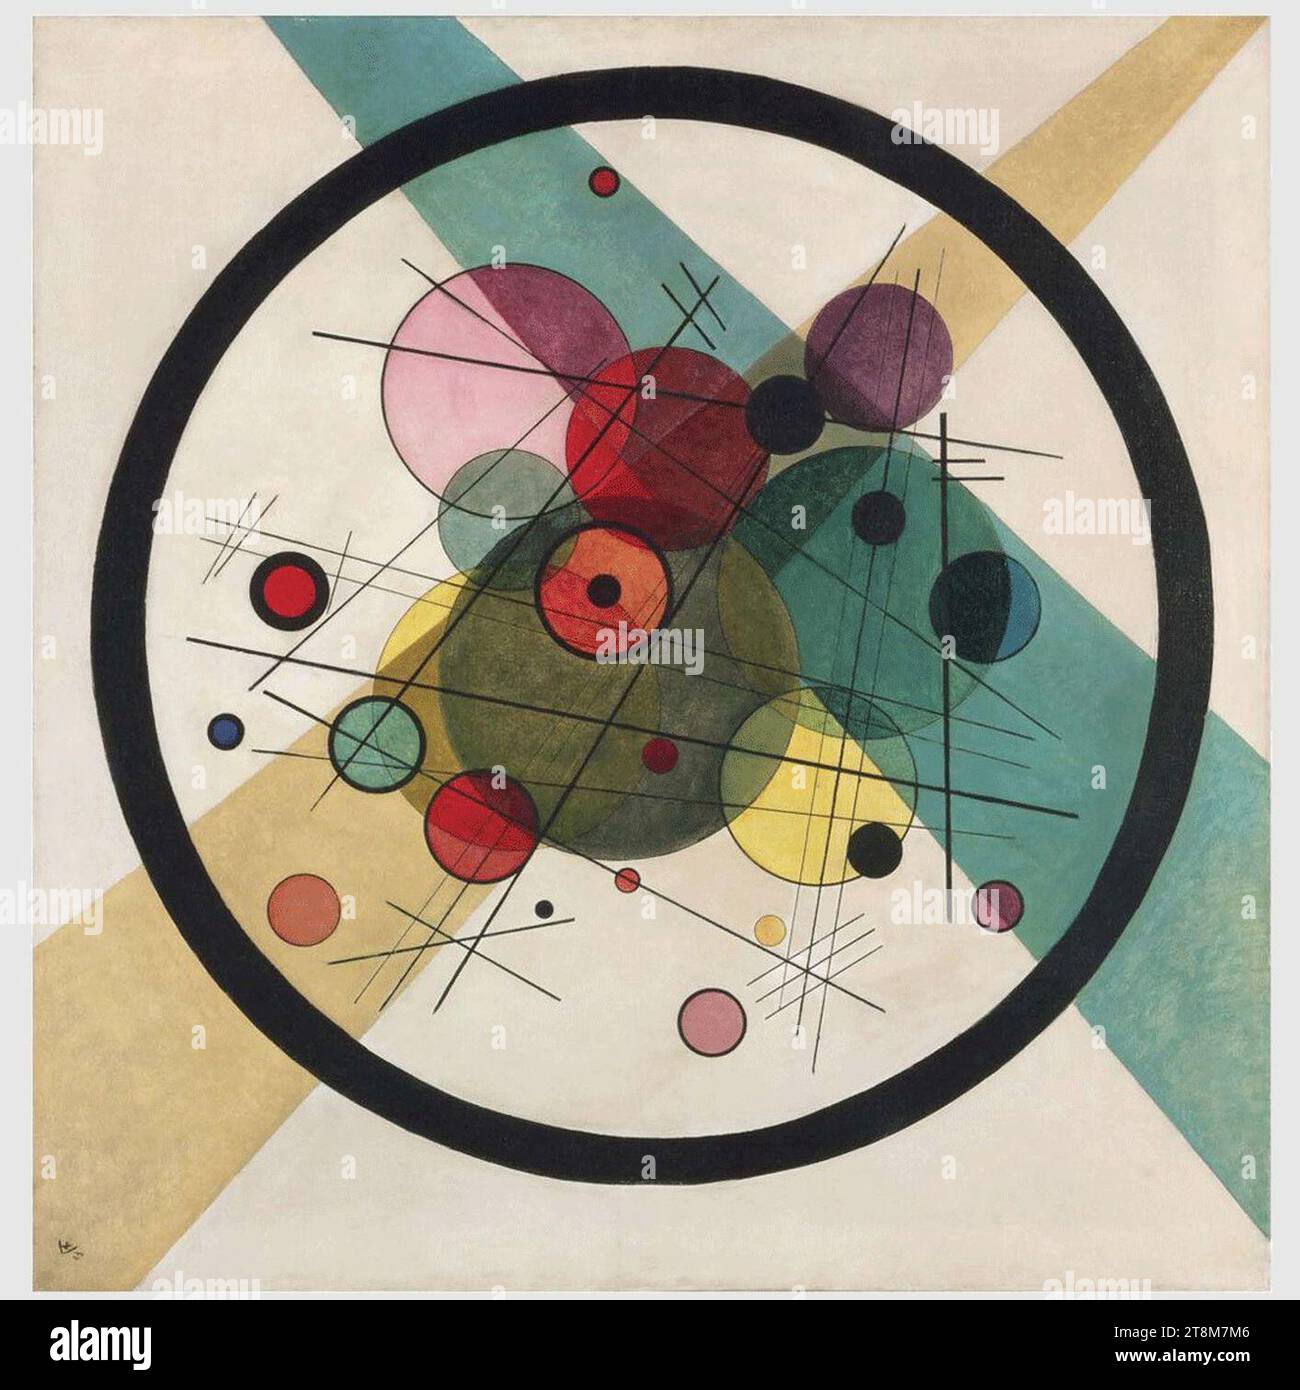 Vassily Kandinsky, 1923 - Circles in a Circle. Stock Photo